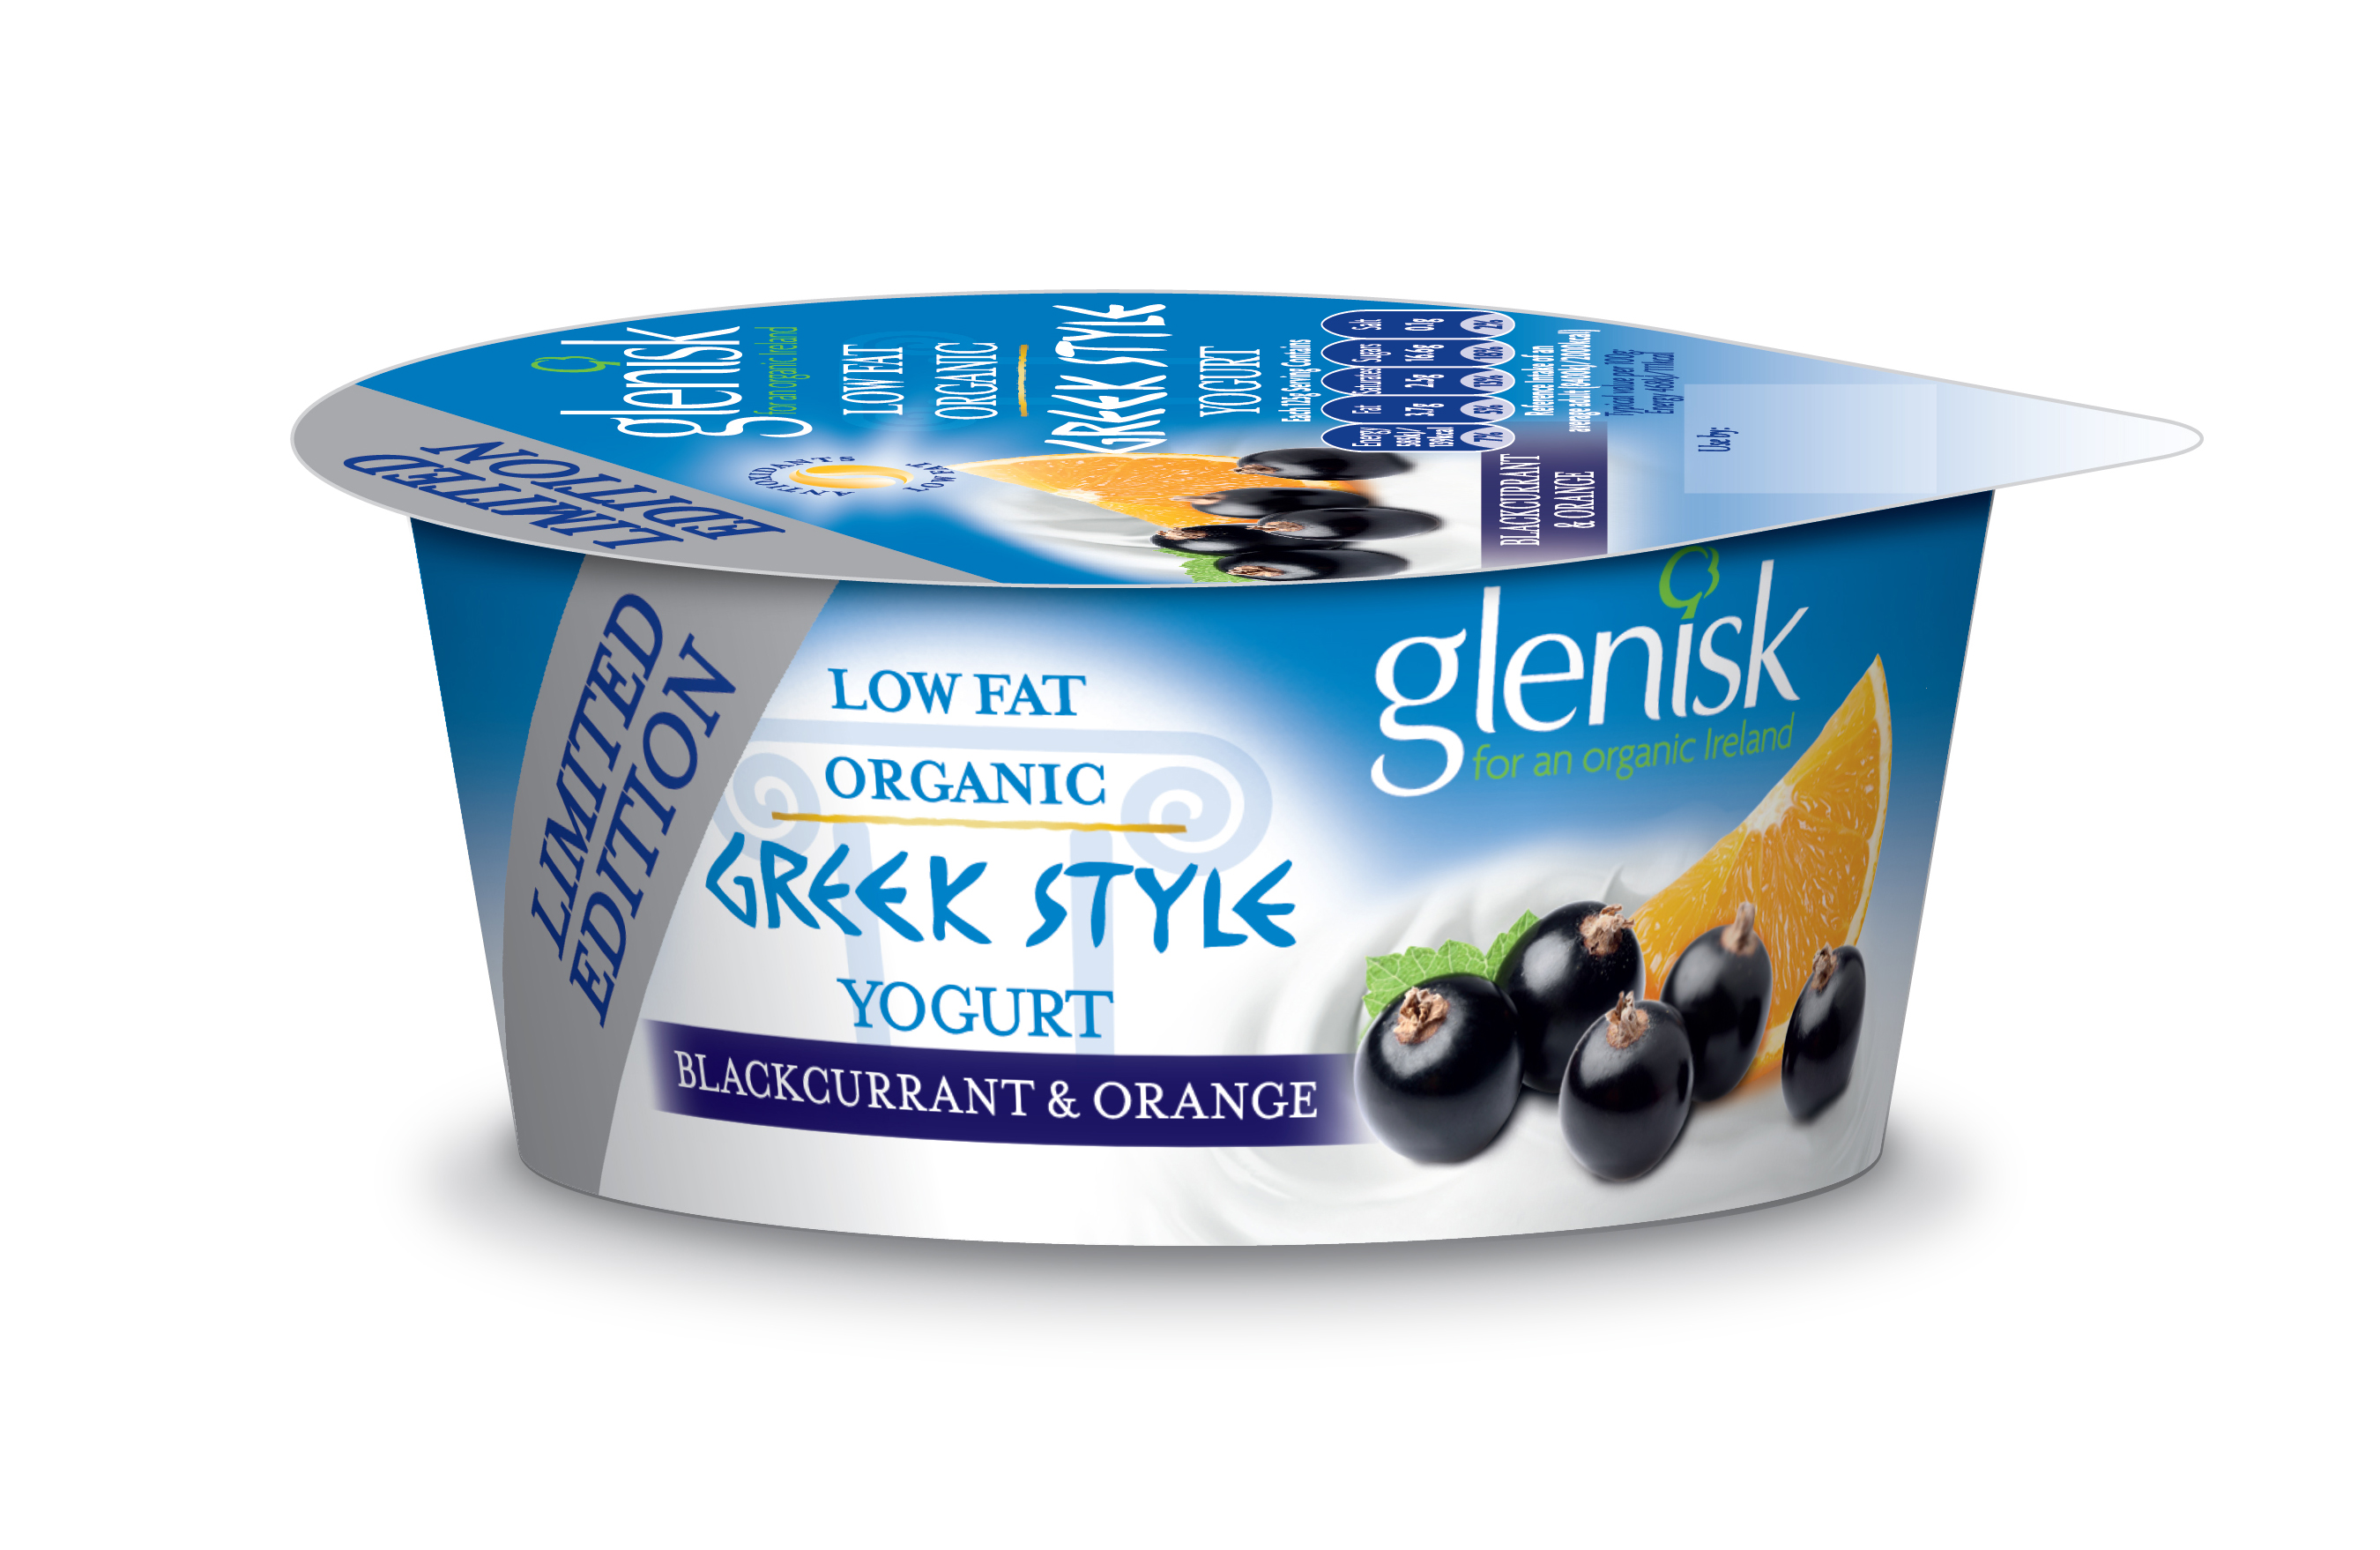 Glenisk has introduced two new Low Fat Greek Style Yogurt flavours to its range of organic yogurts; Raspberry & Lemon Curd and Orange & Blackcurrant